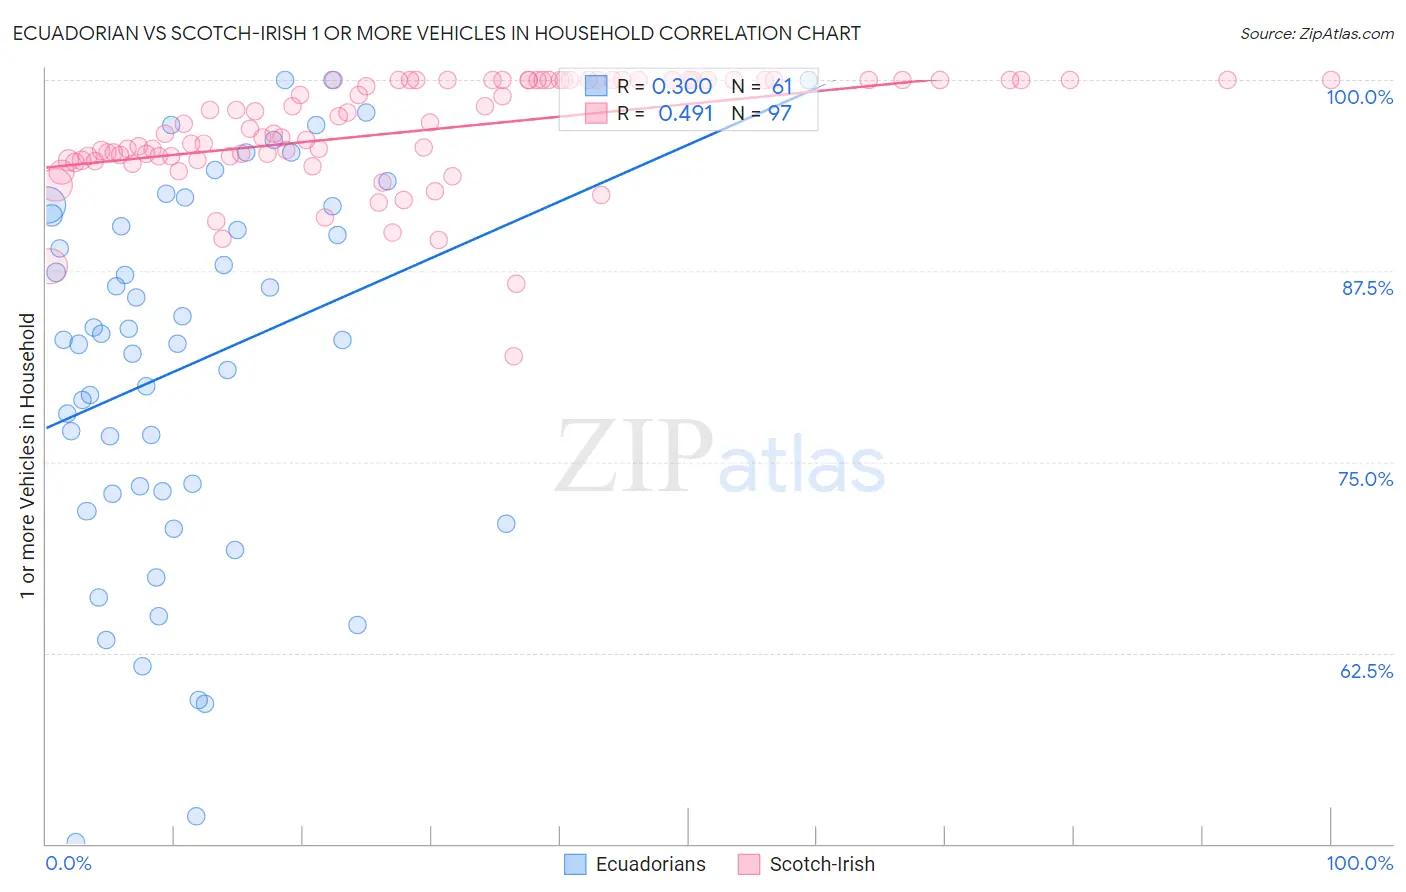 Ecuadorian vs Scotch-Irish 1 or more Vehicles in Household